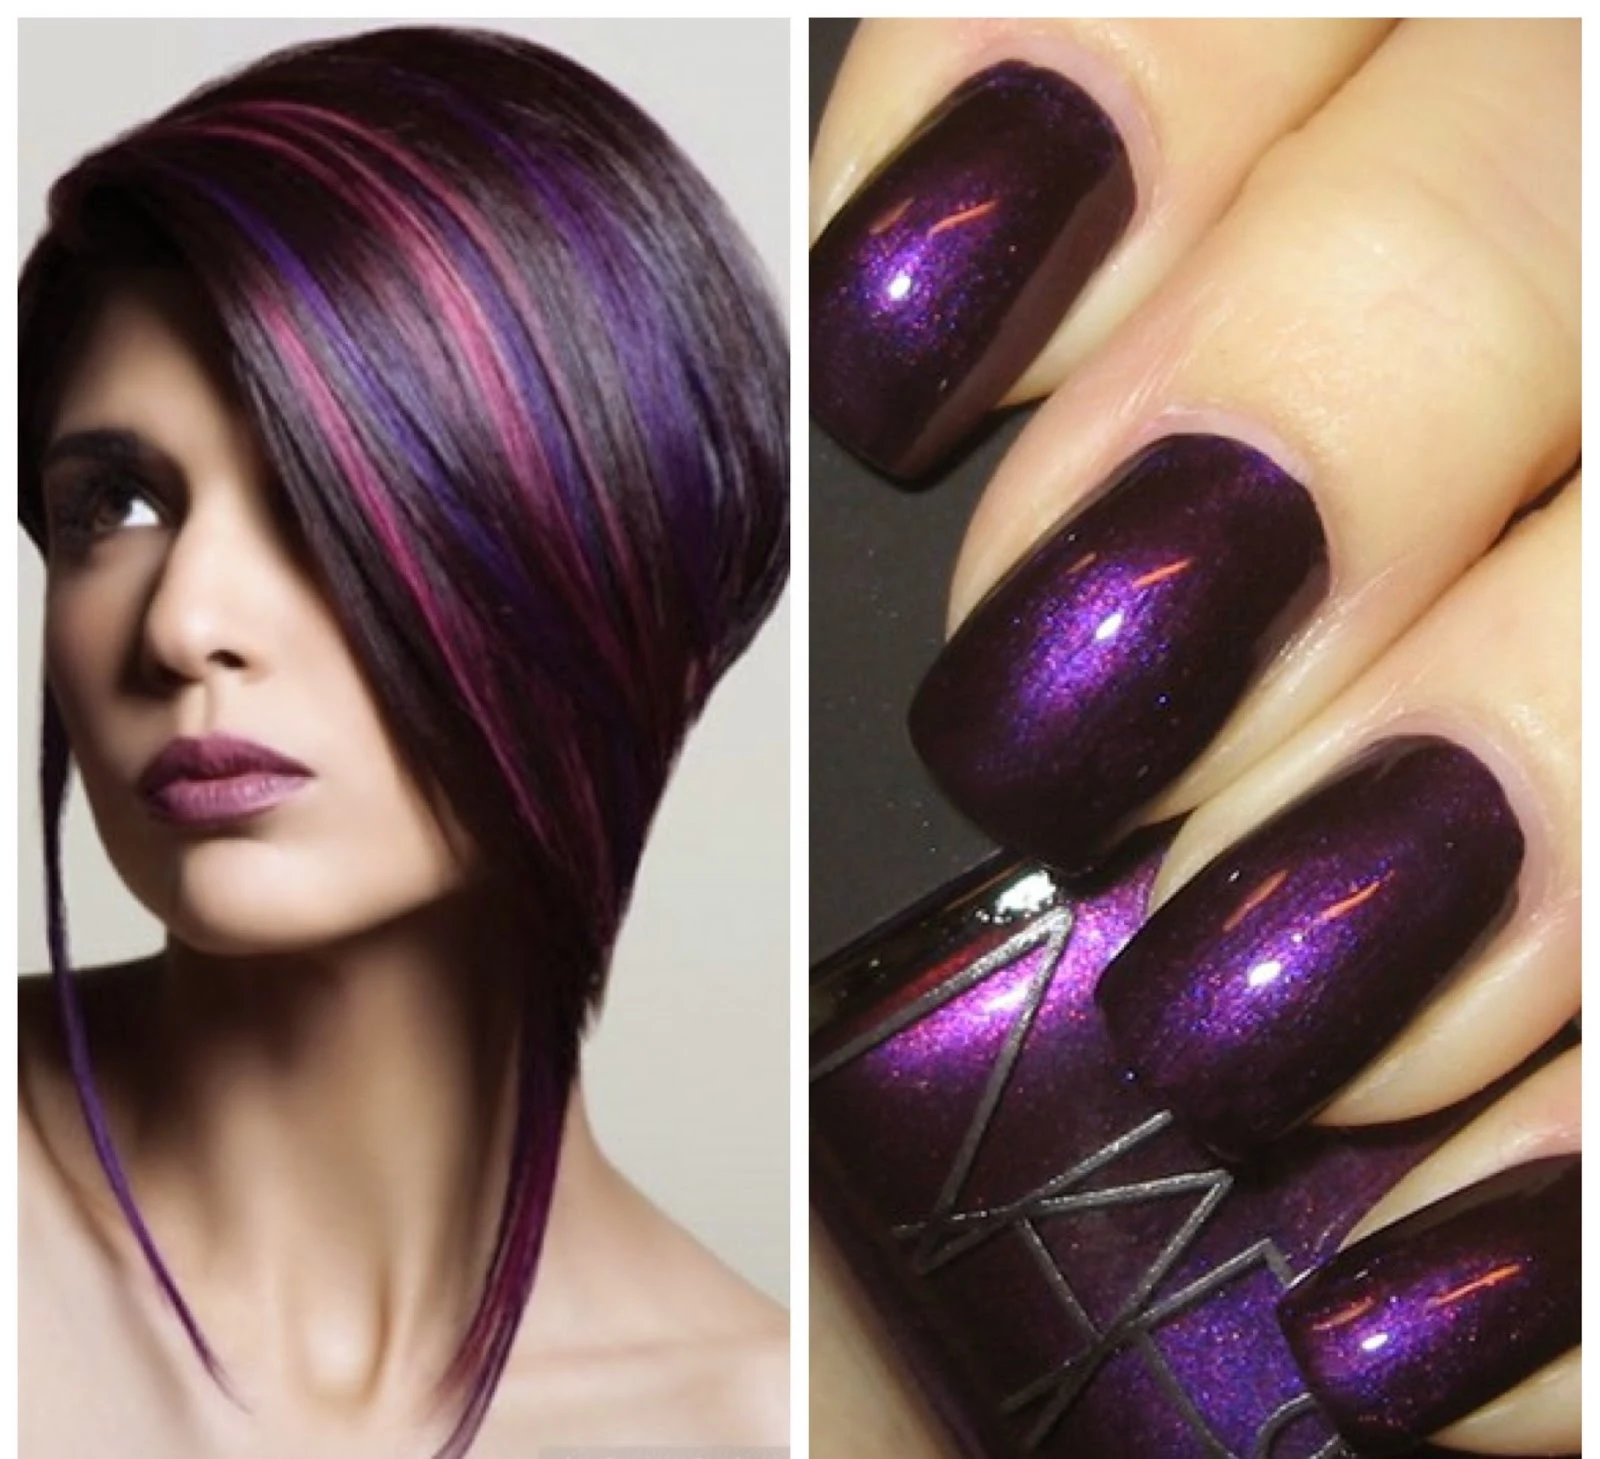 textures-trends-purple-hair-nail-polish